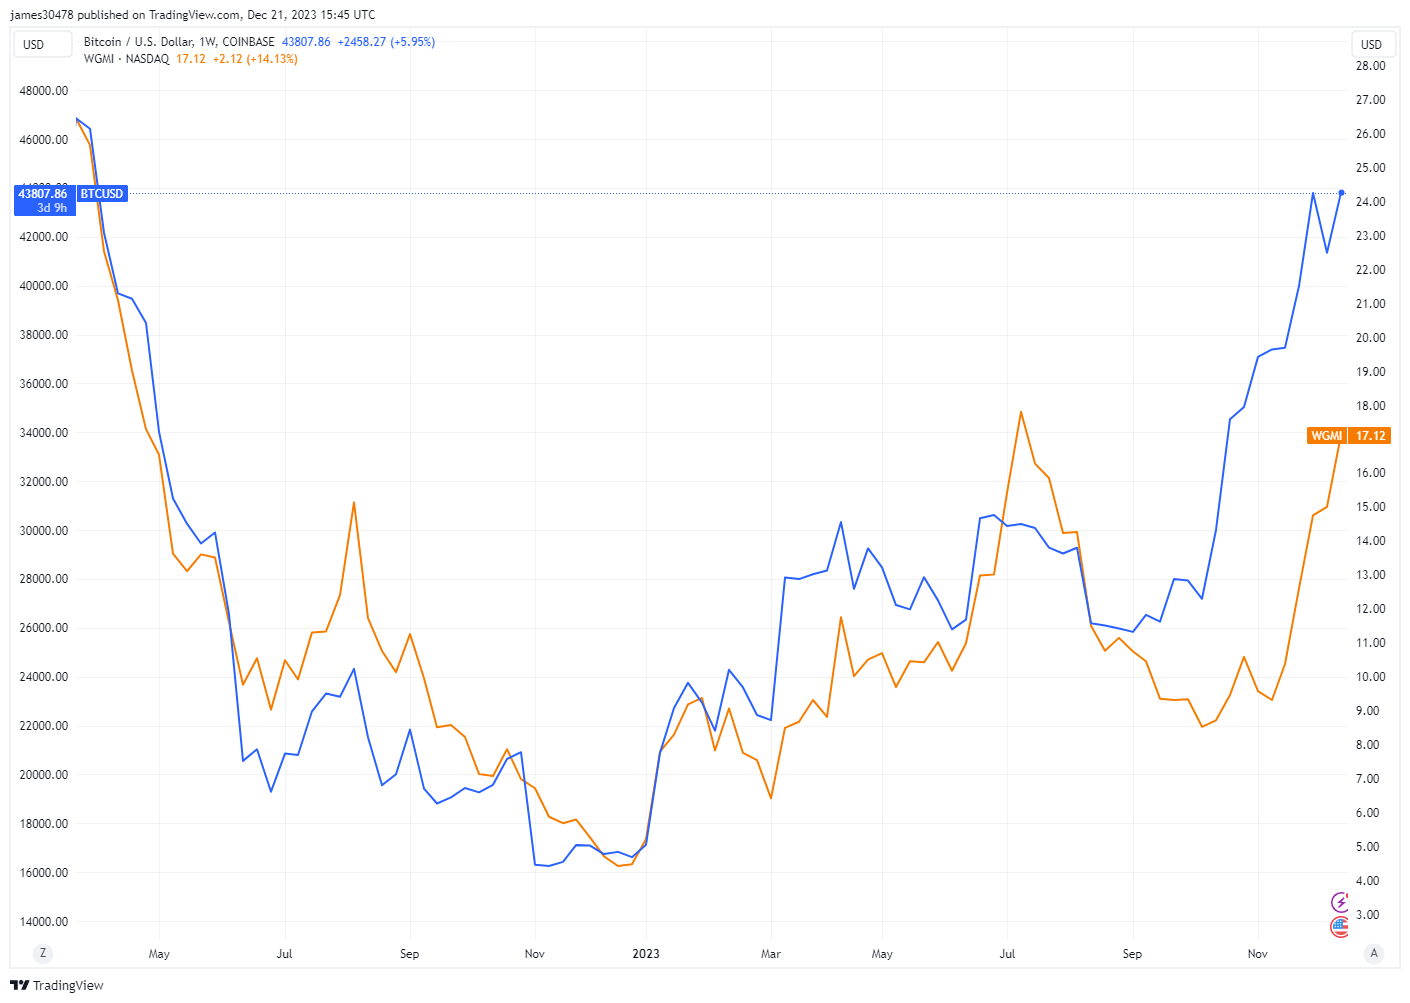 WGMI vs BTCUSD: (Source: Trading View)